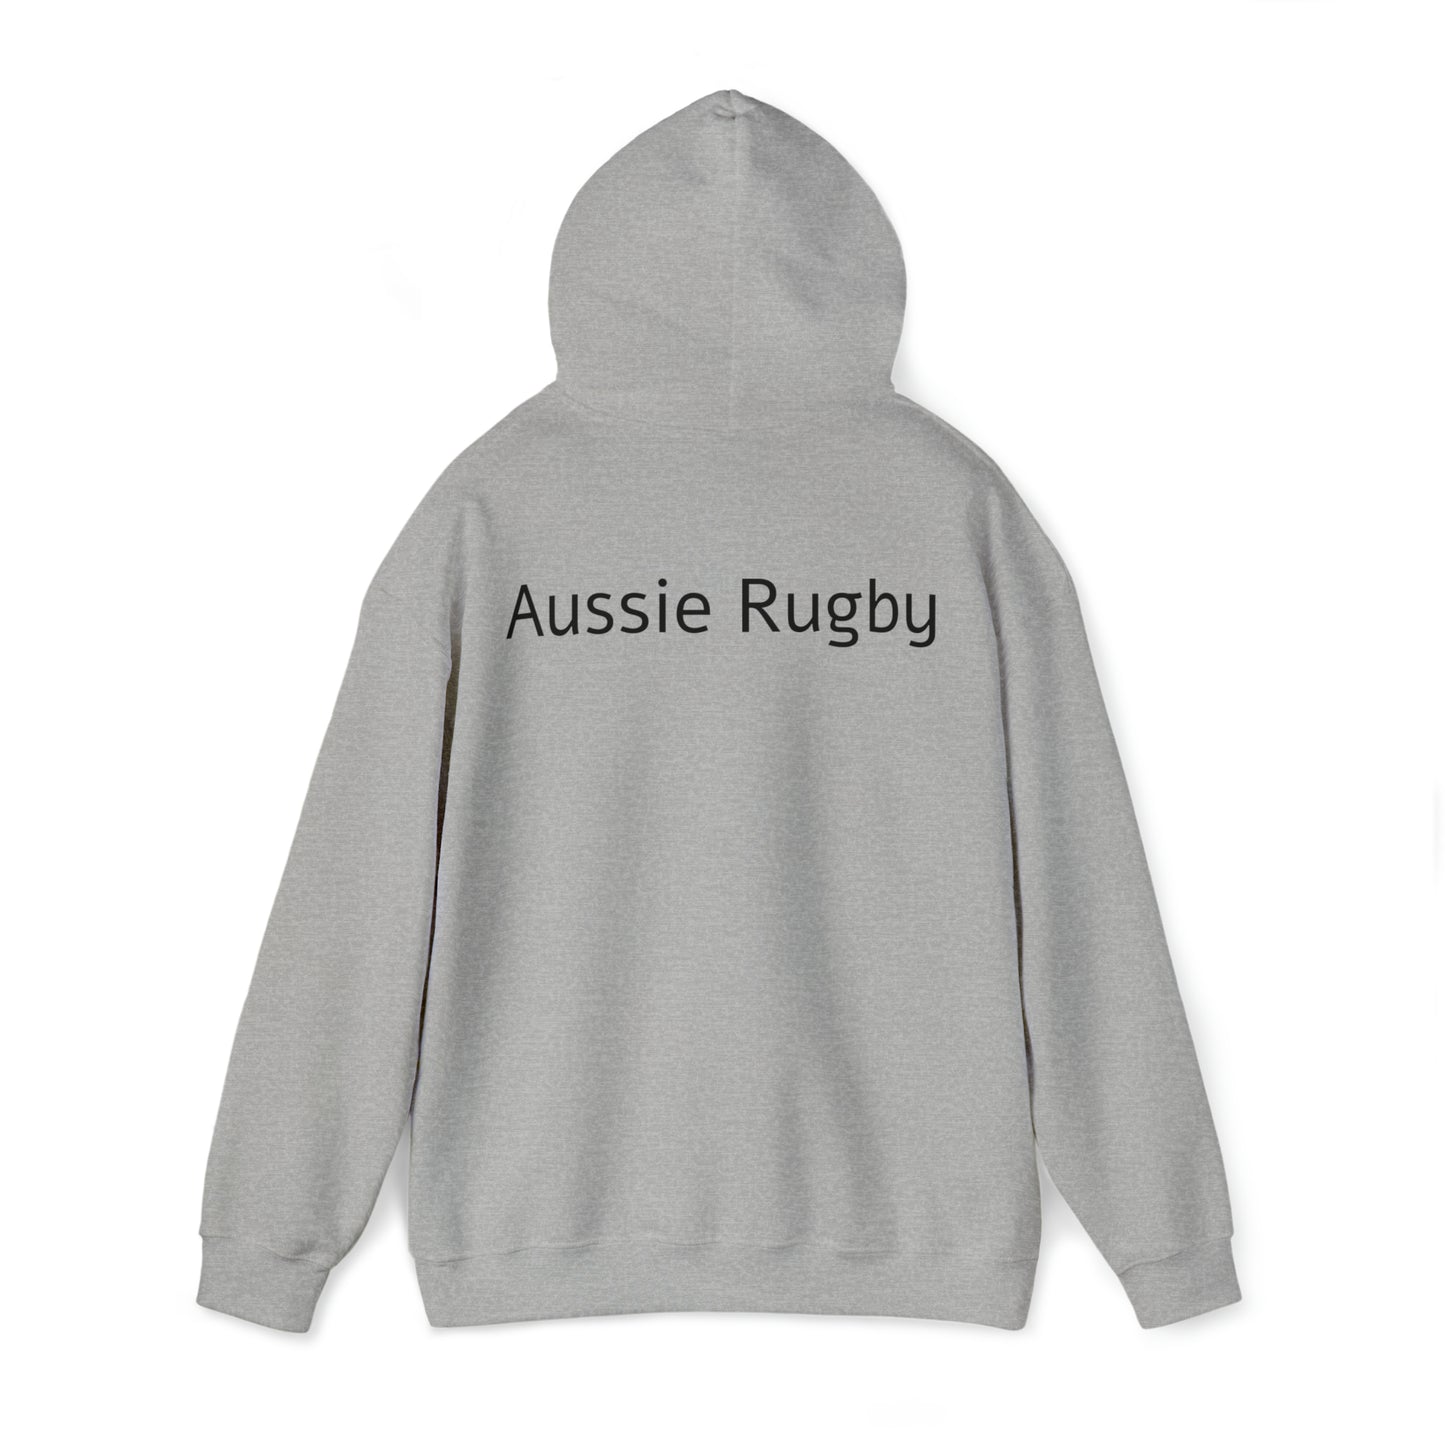 Ready Aussies - light hoodies